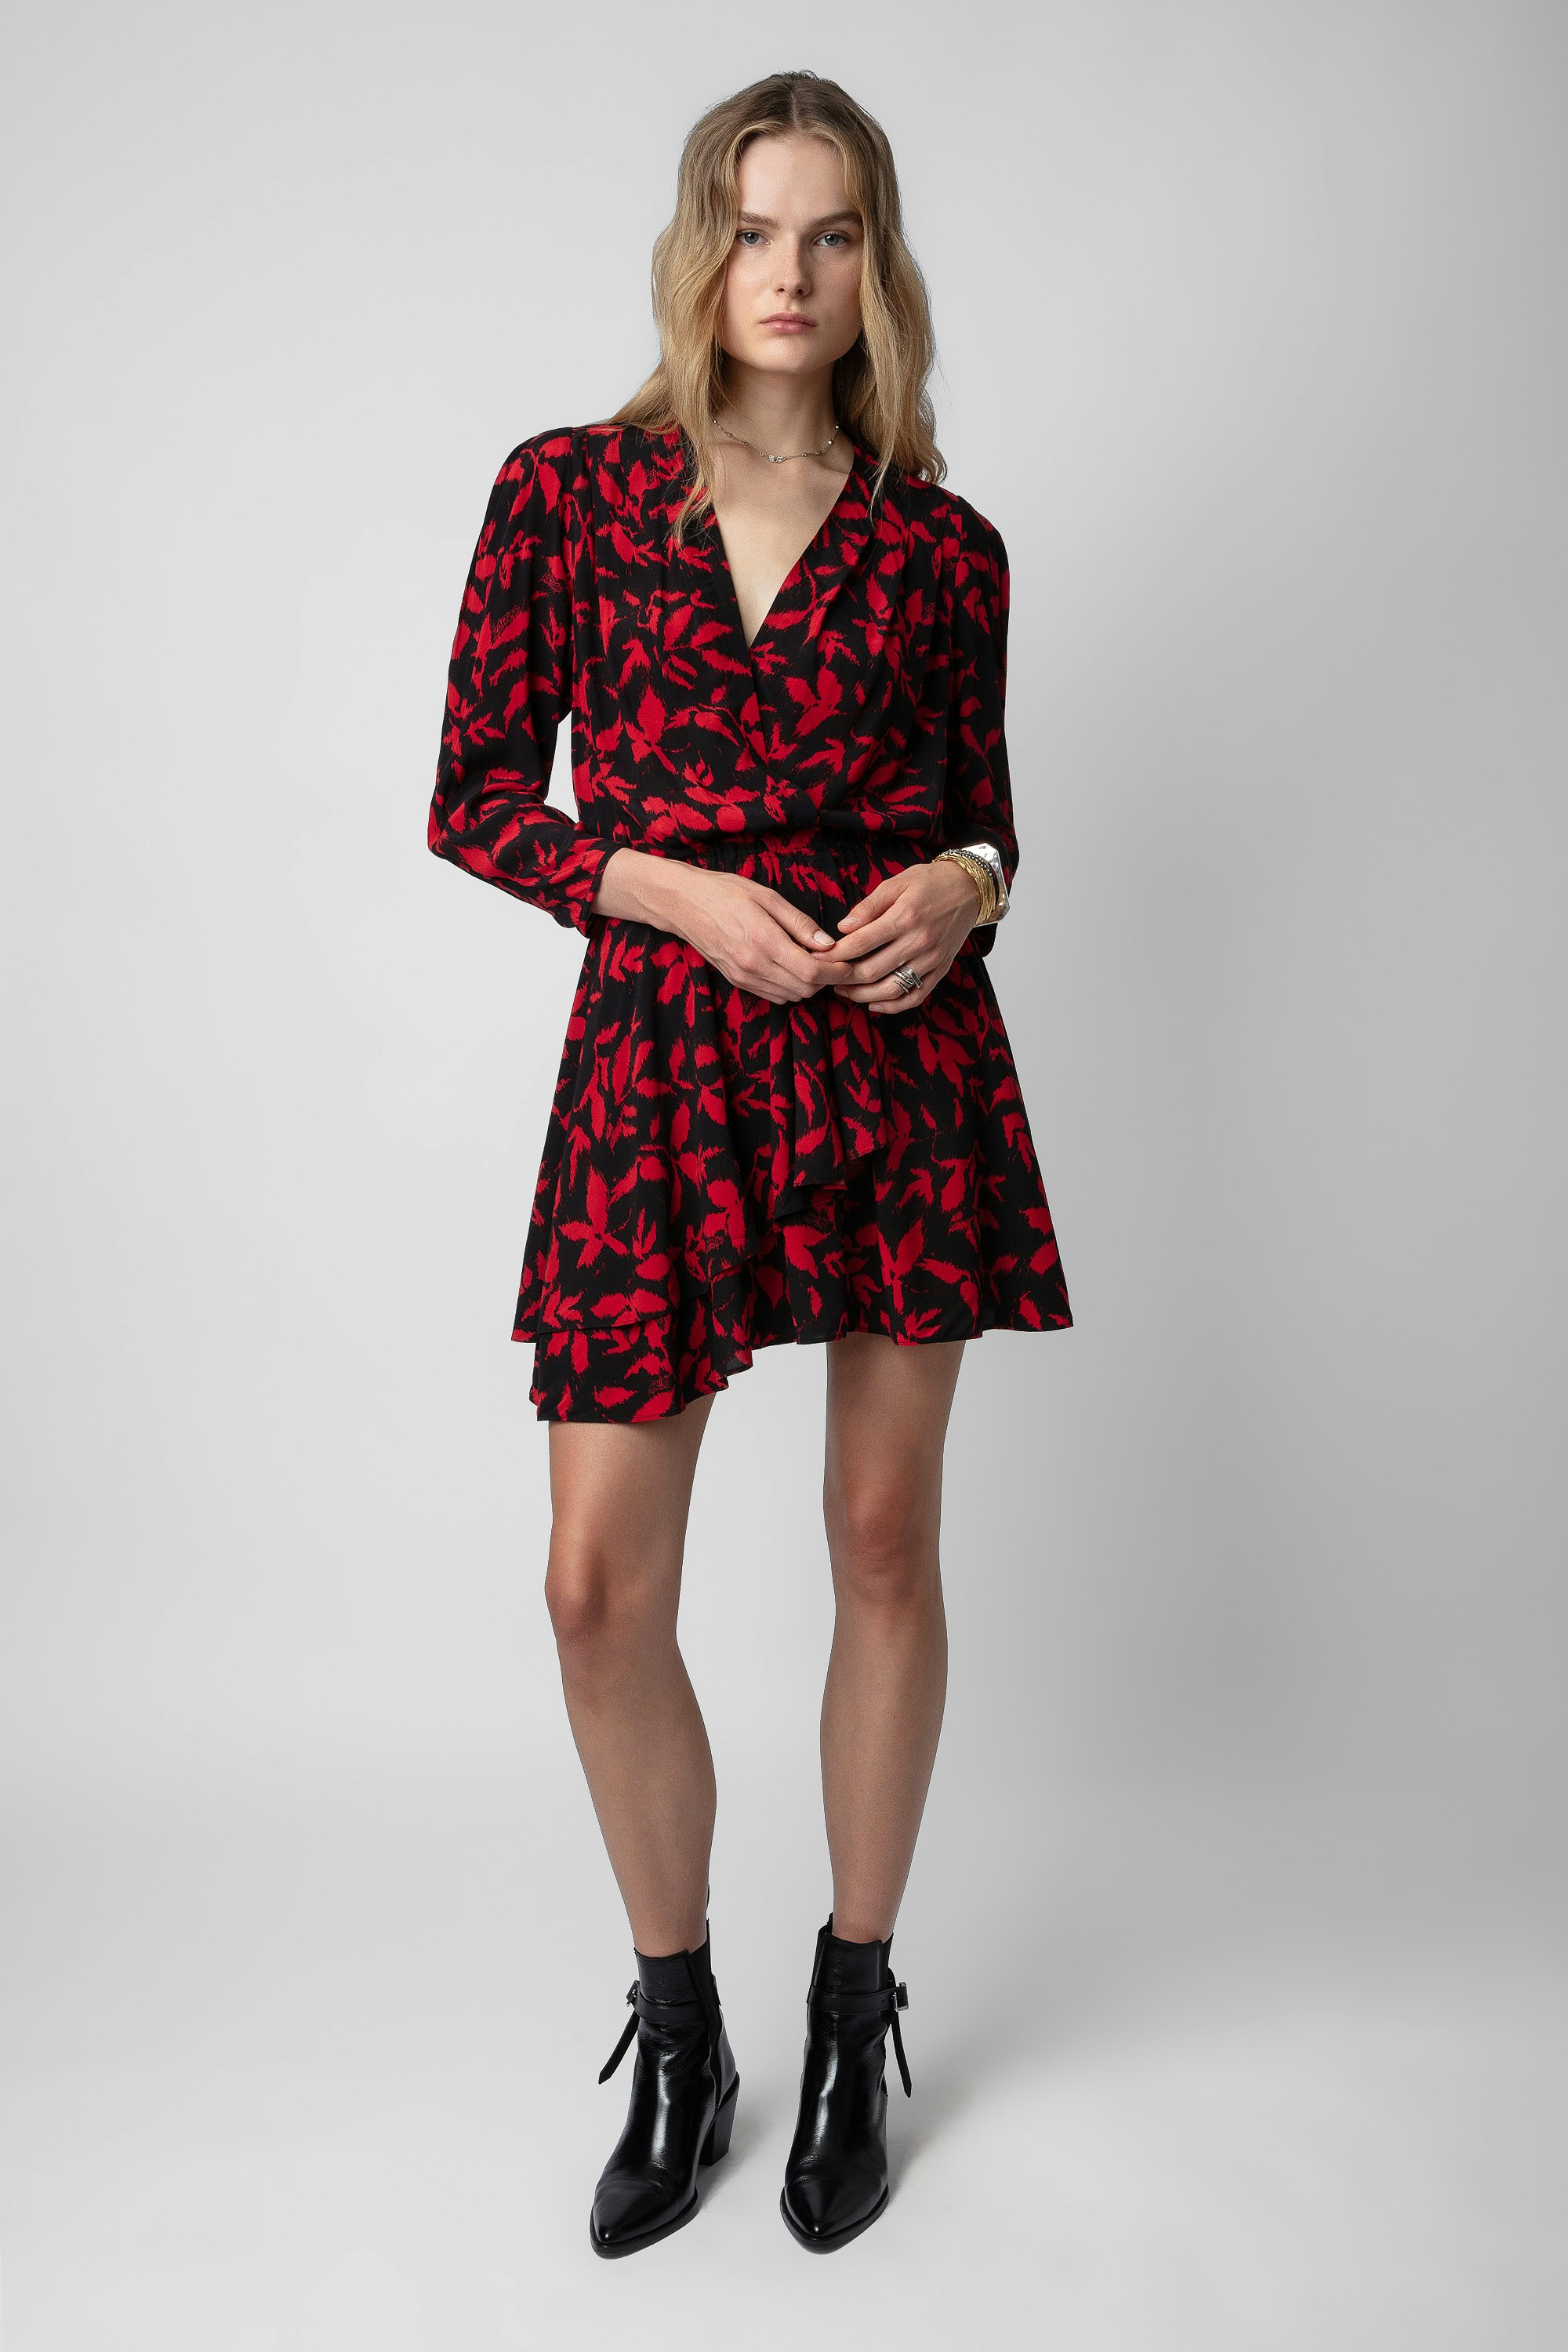 Kleid Rogers - Kurzes, khakifarbenes Damenkleid mit Blumen-Print und Faltenrock.